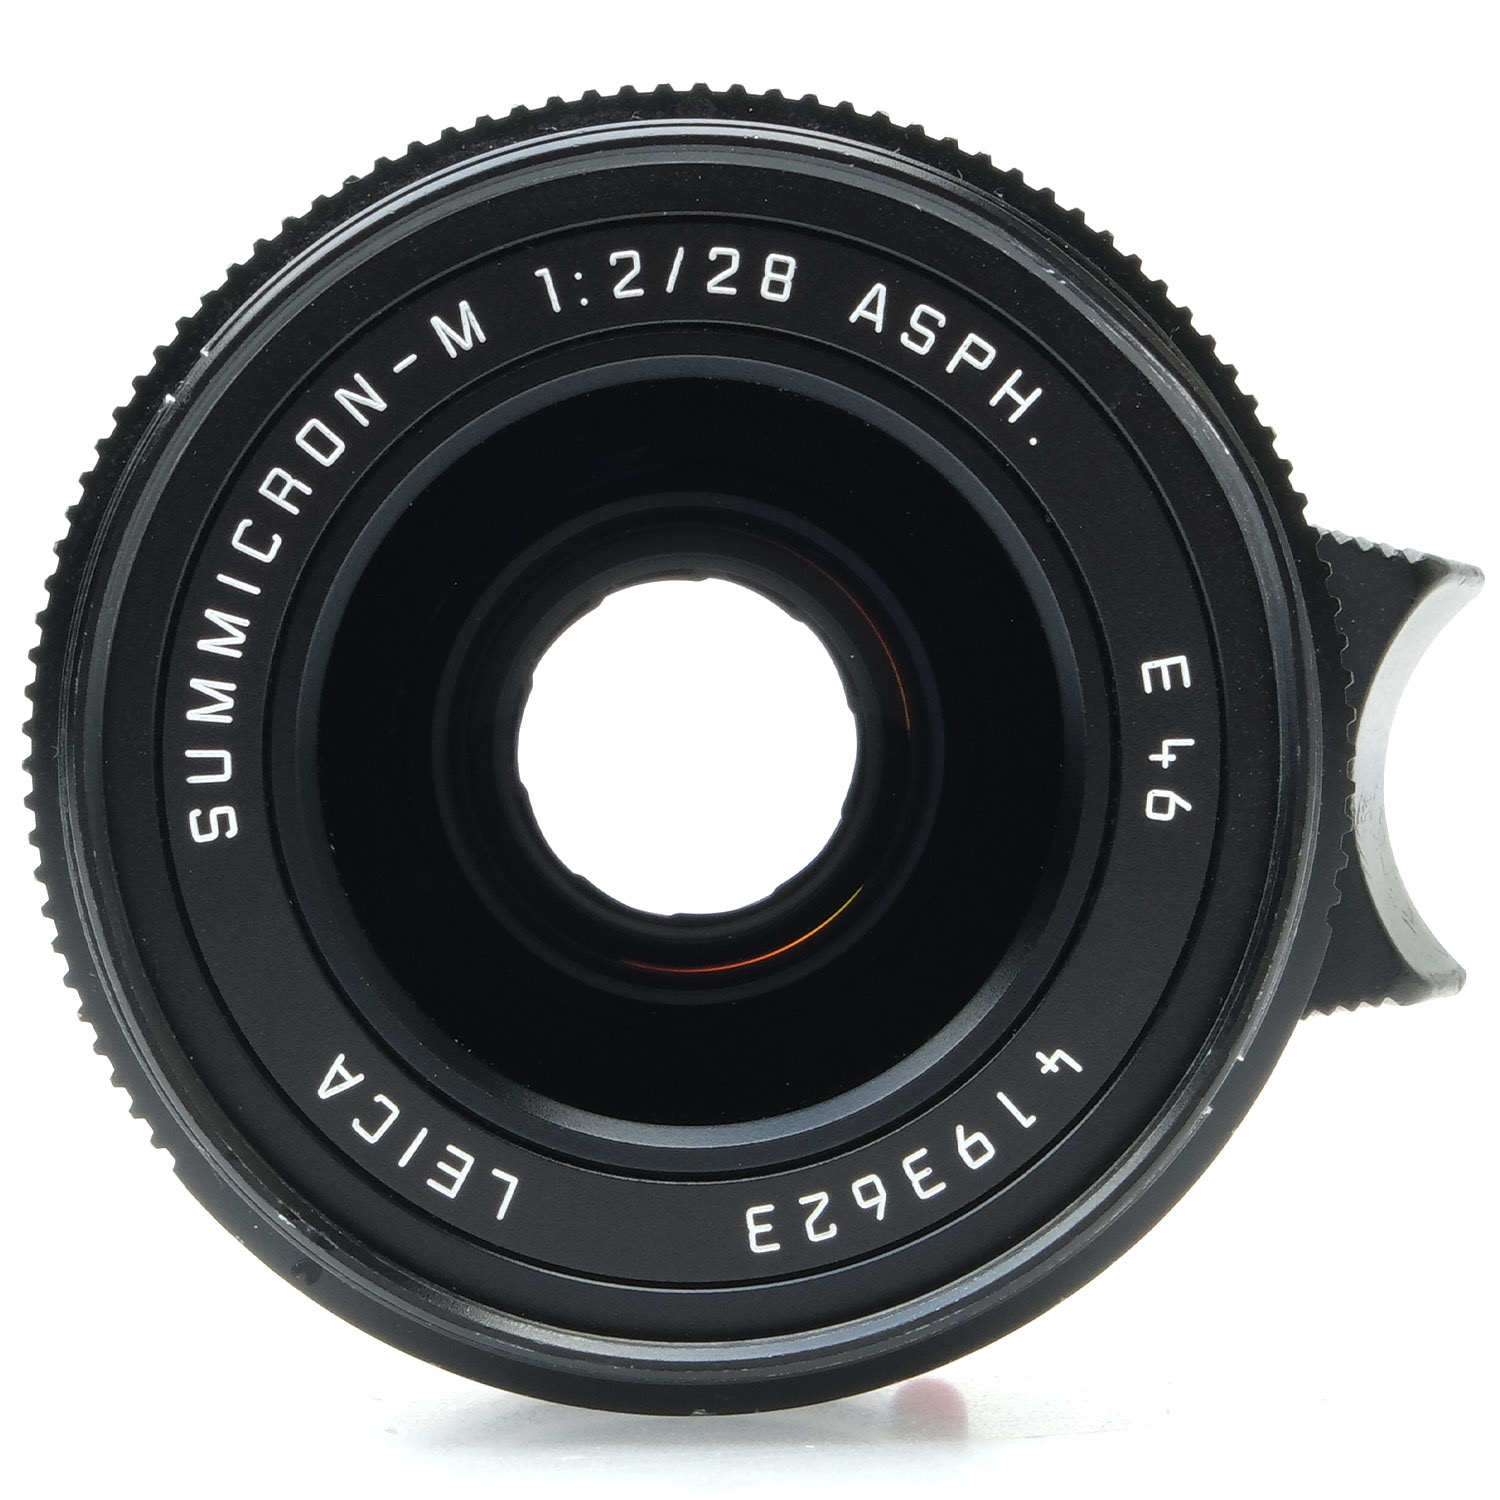 Leica 28mm f2 Asph 4193623